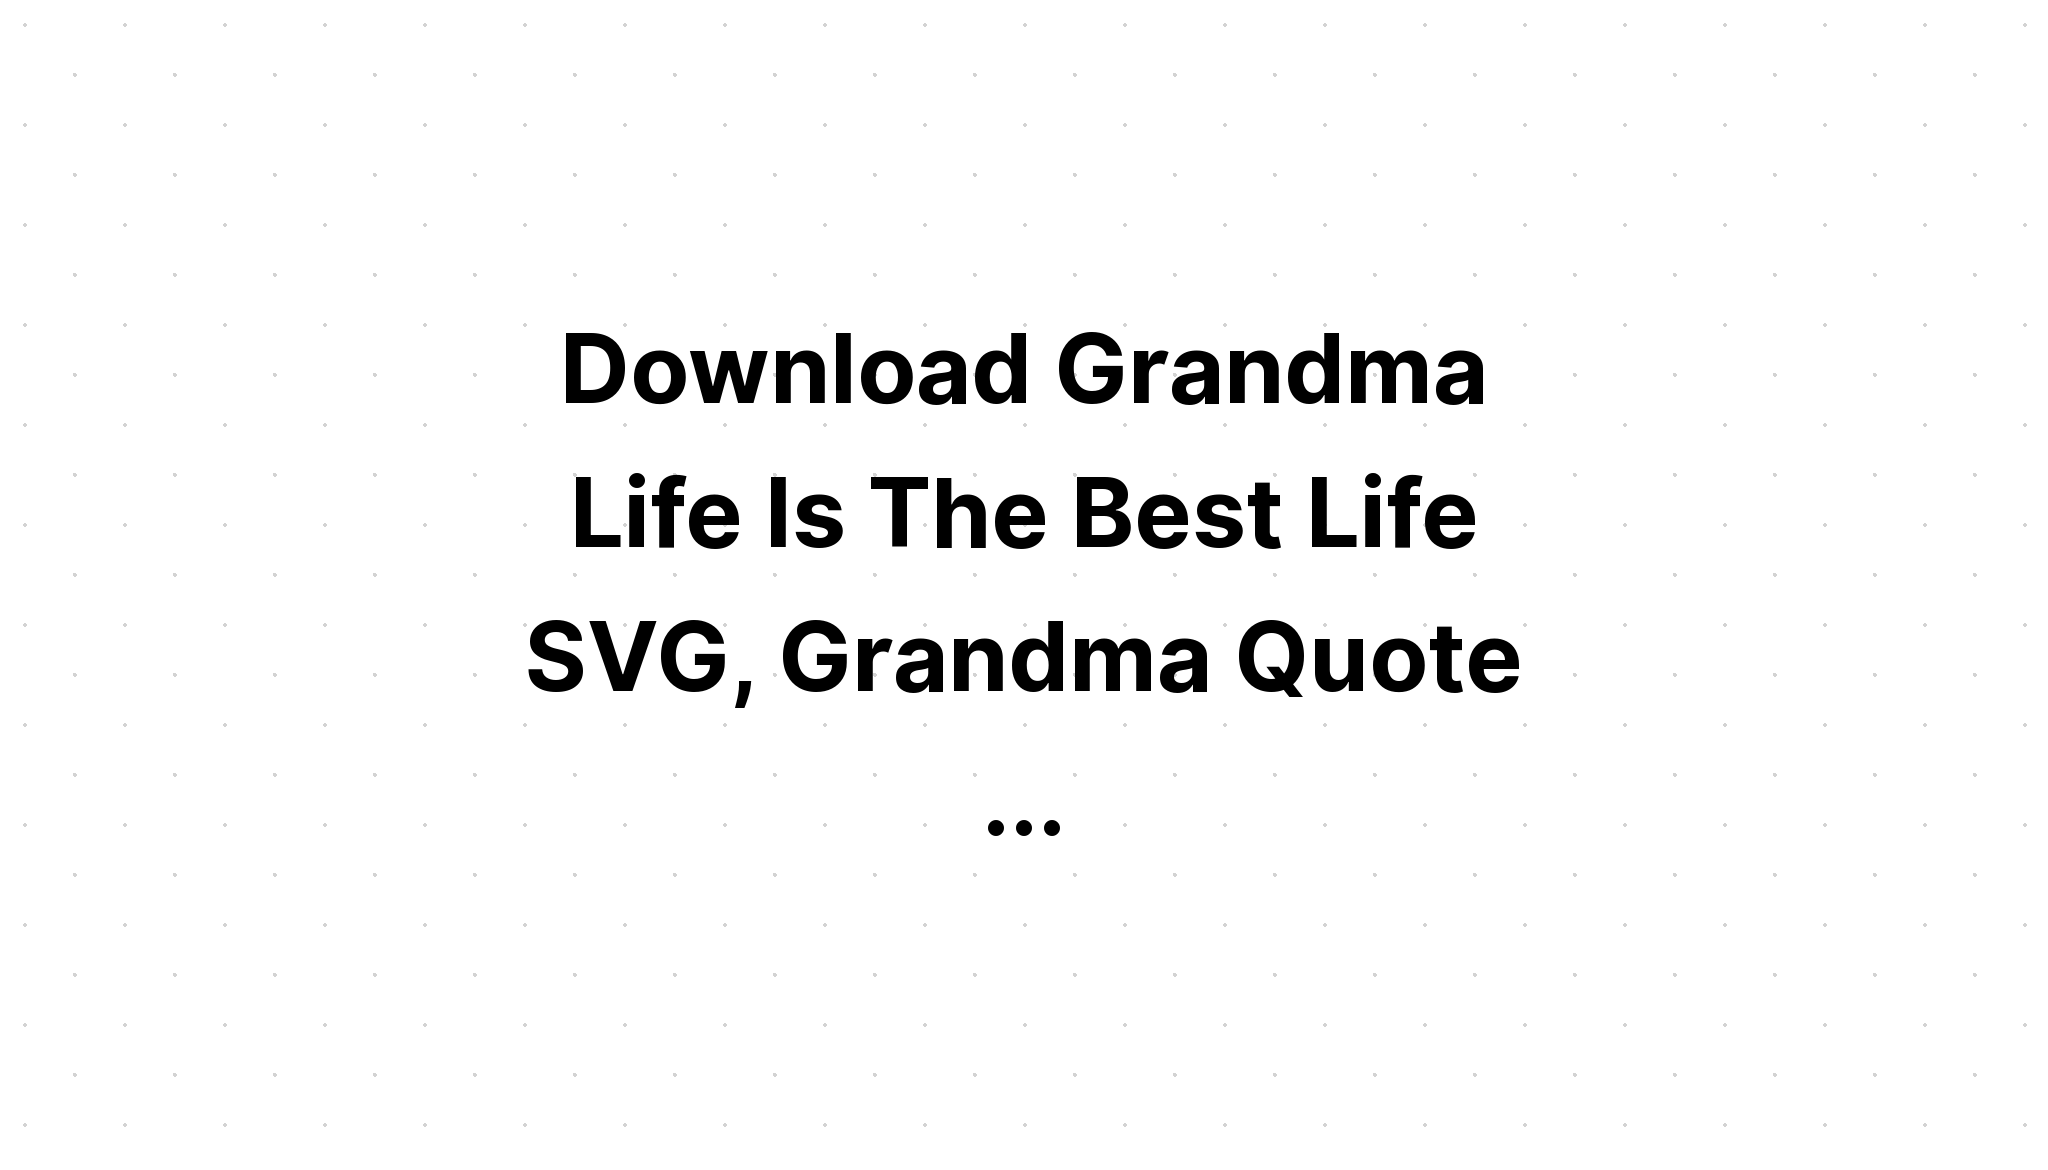 Download Love Grandma Life Svg - Layered SVG Cut File